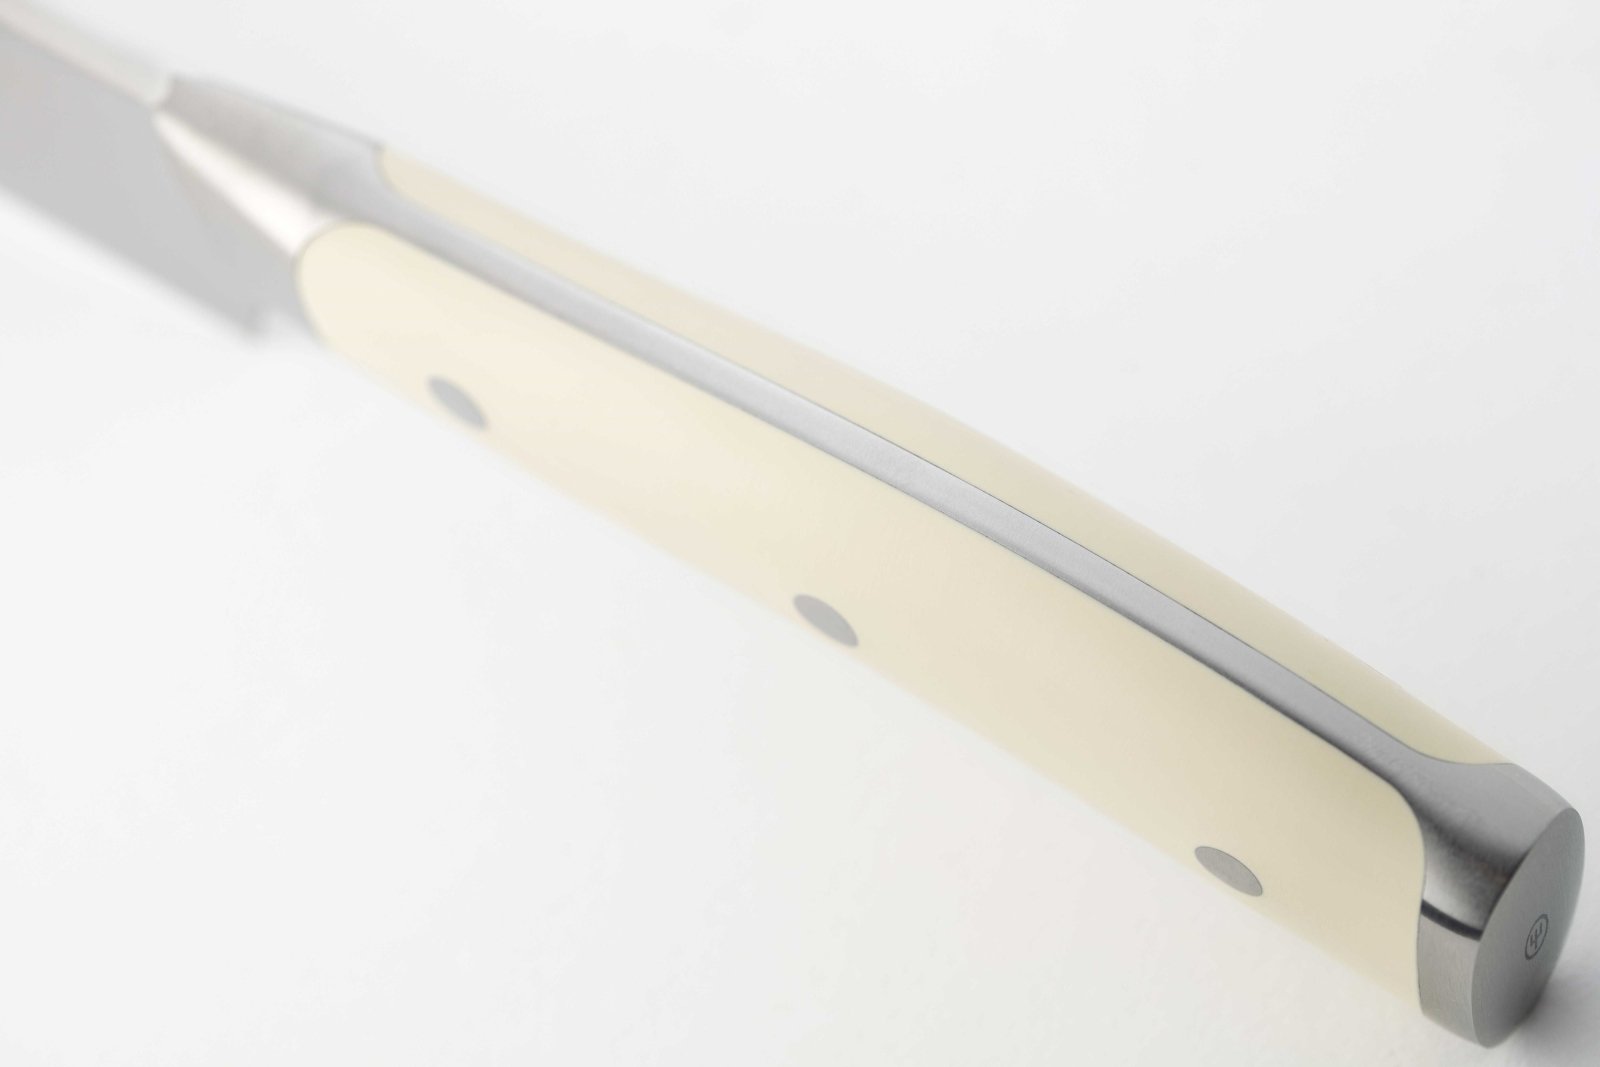 Wusthof Classic IKON Crème 16cm Utility Knife - WT1040430716 - The Cotswold Knife Company